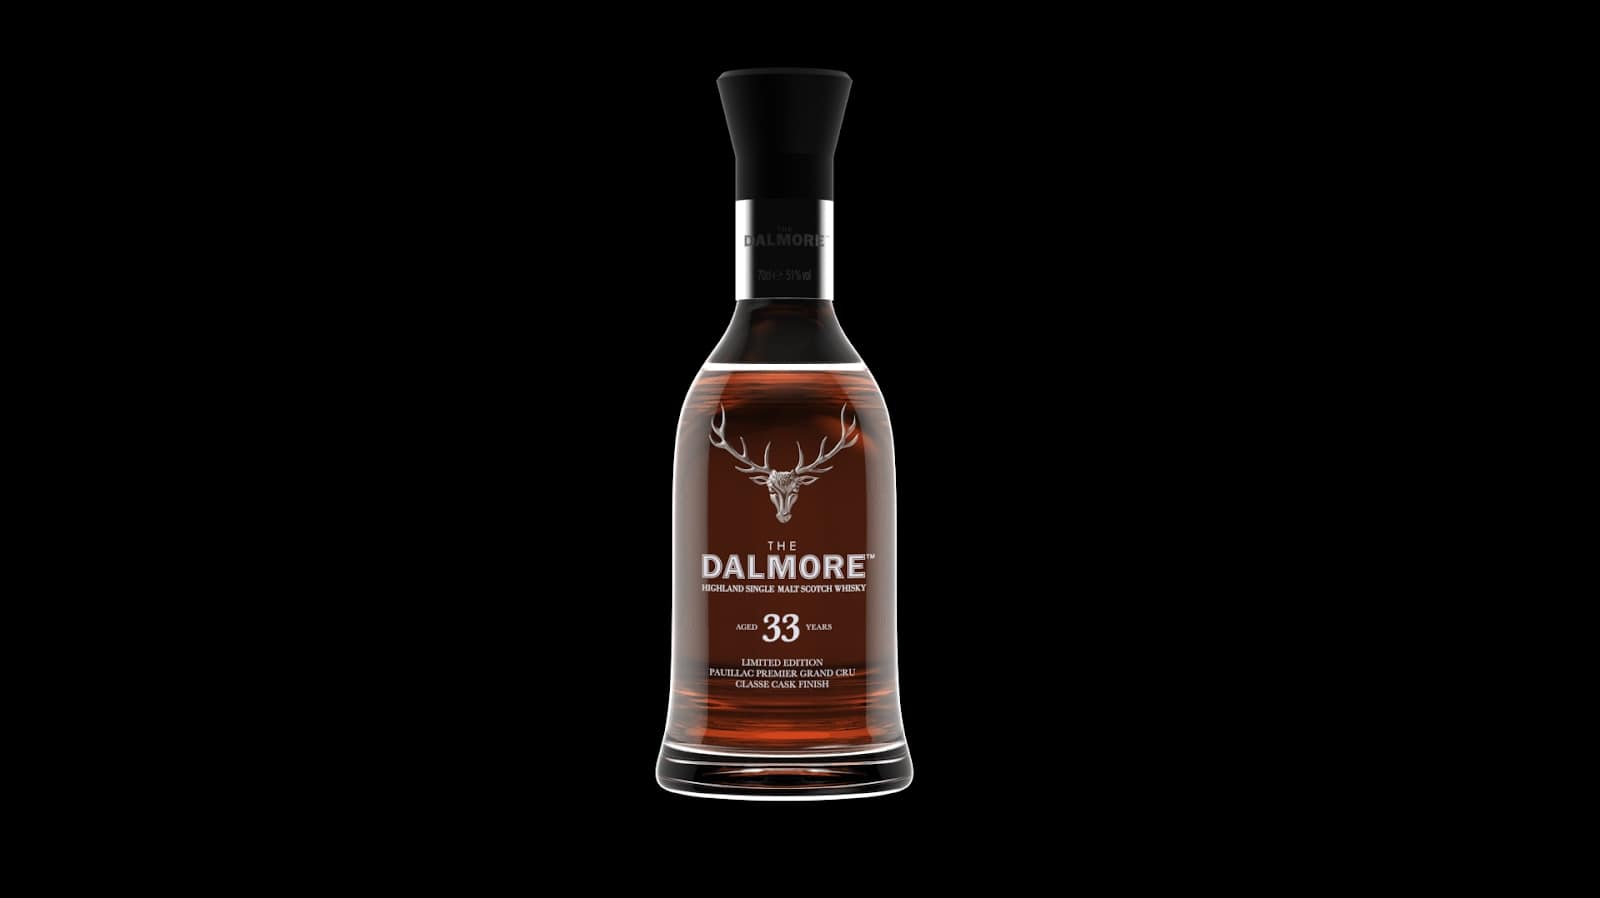 The Dalmore whiskey bottle